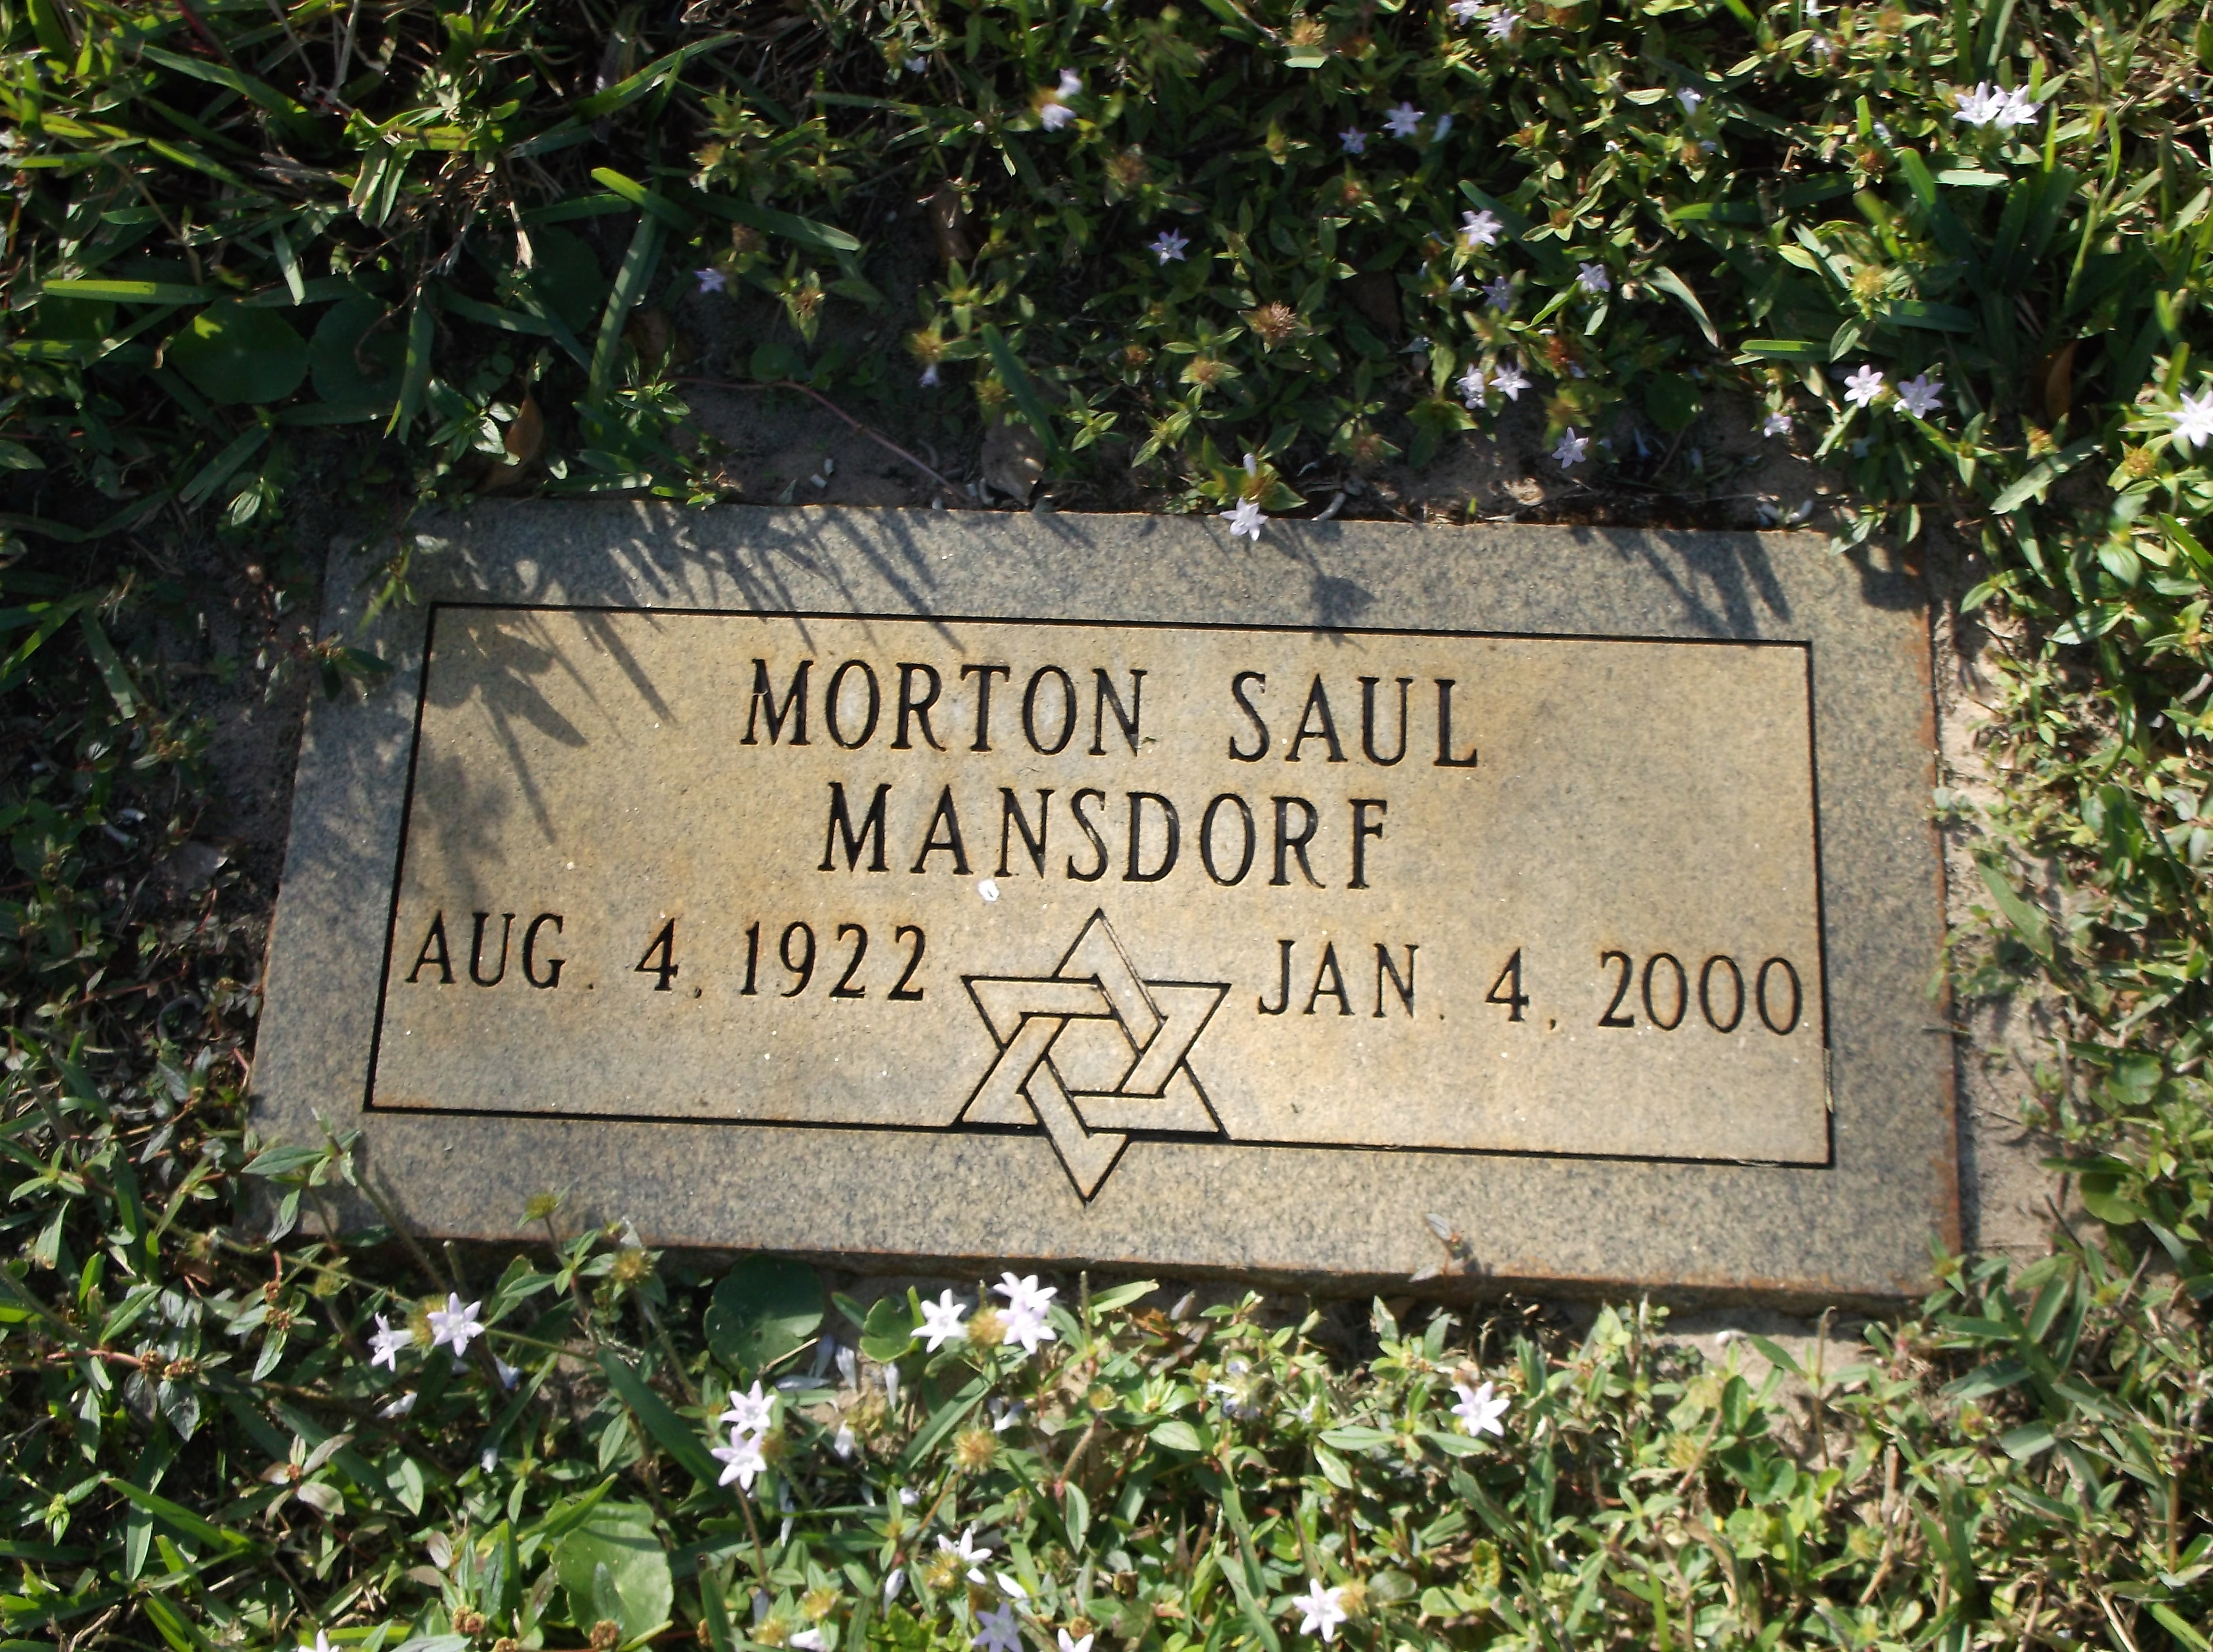 Morton Saul Mansdorf